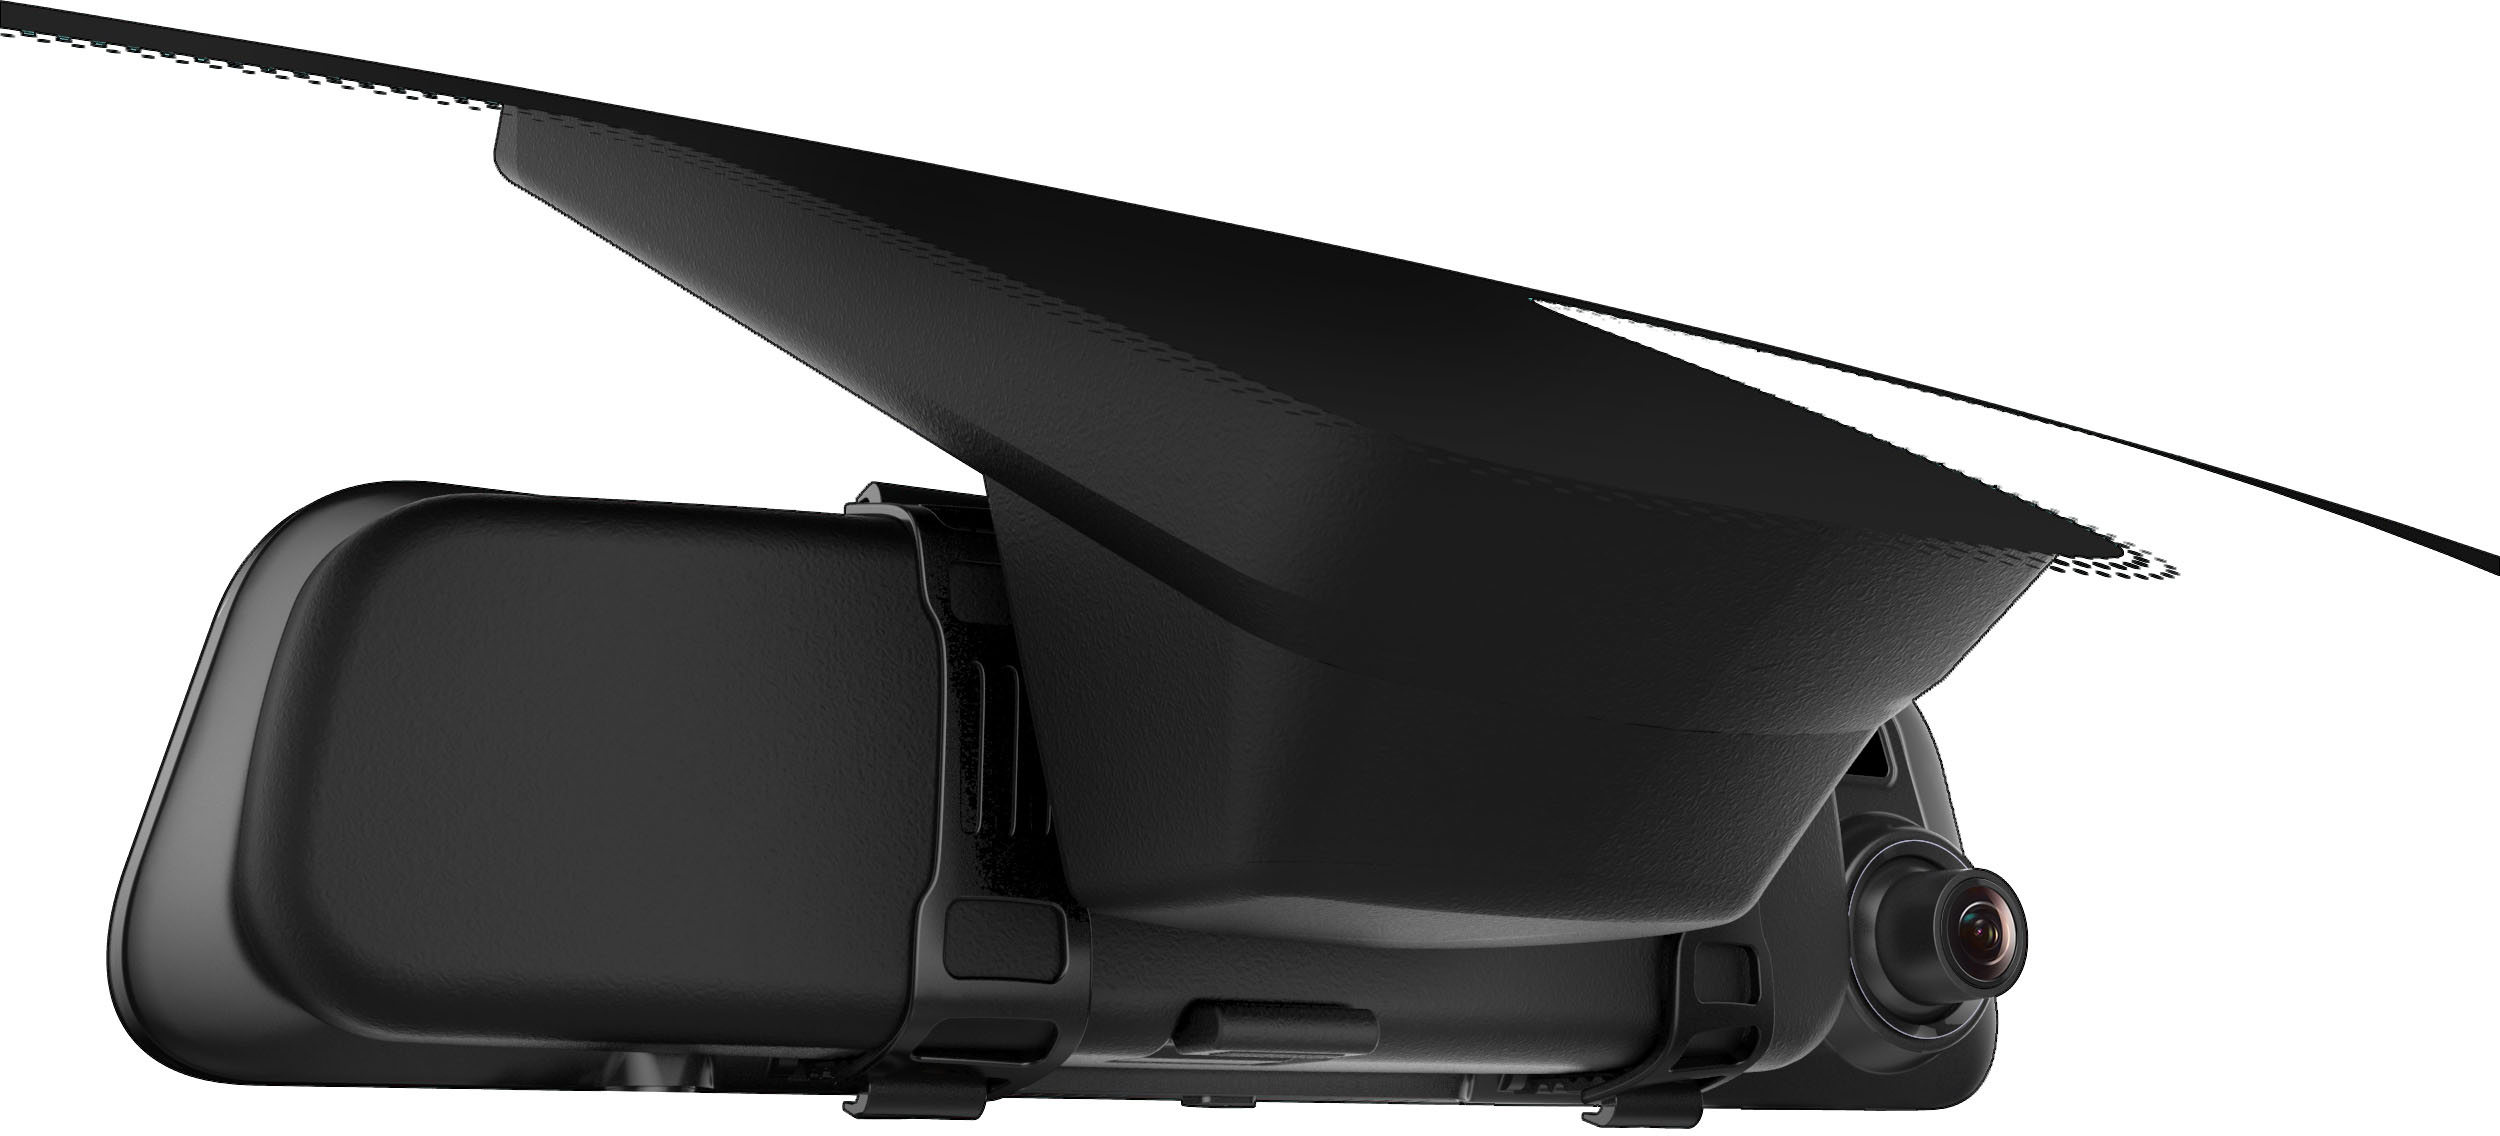 Galphi M2 3 Channel Dash Cam Front & Rear Inside 1080P Dash Camera MISSING  MOUNT